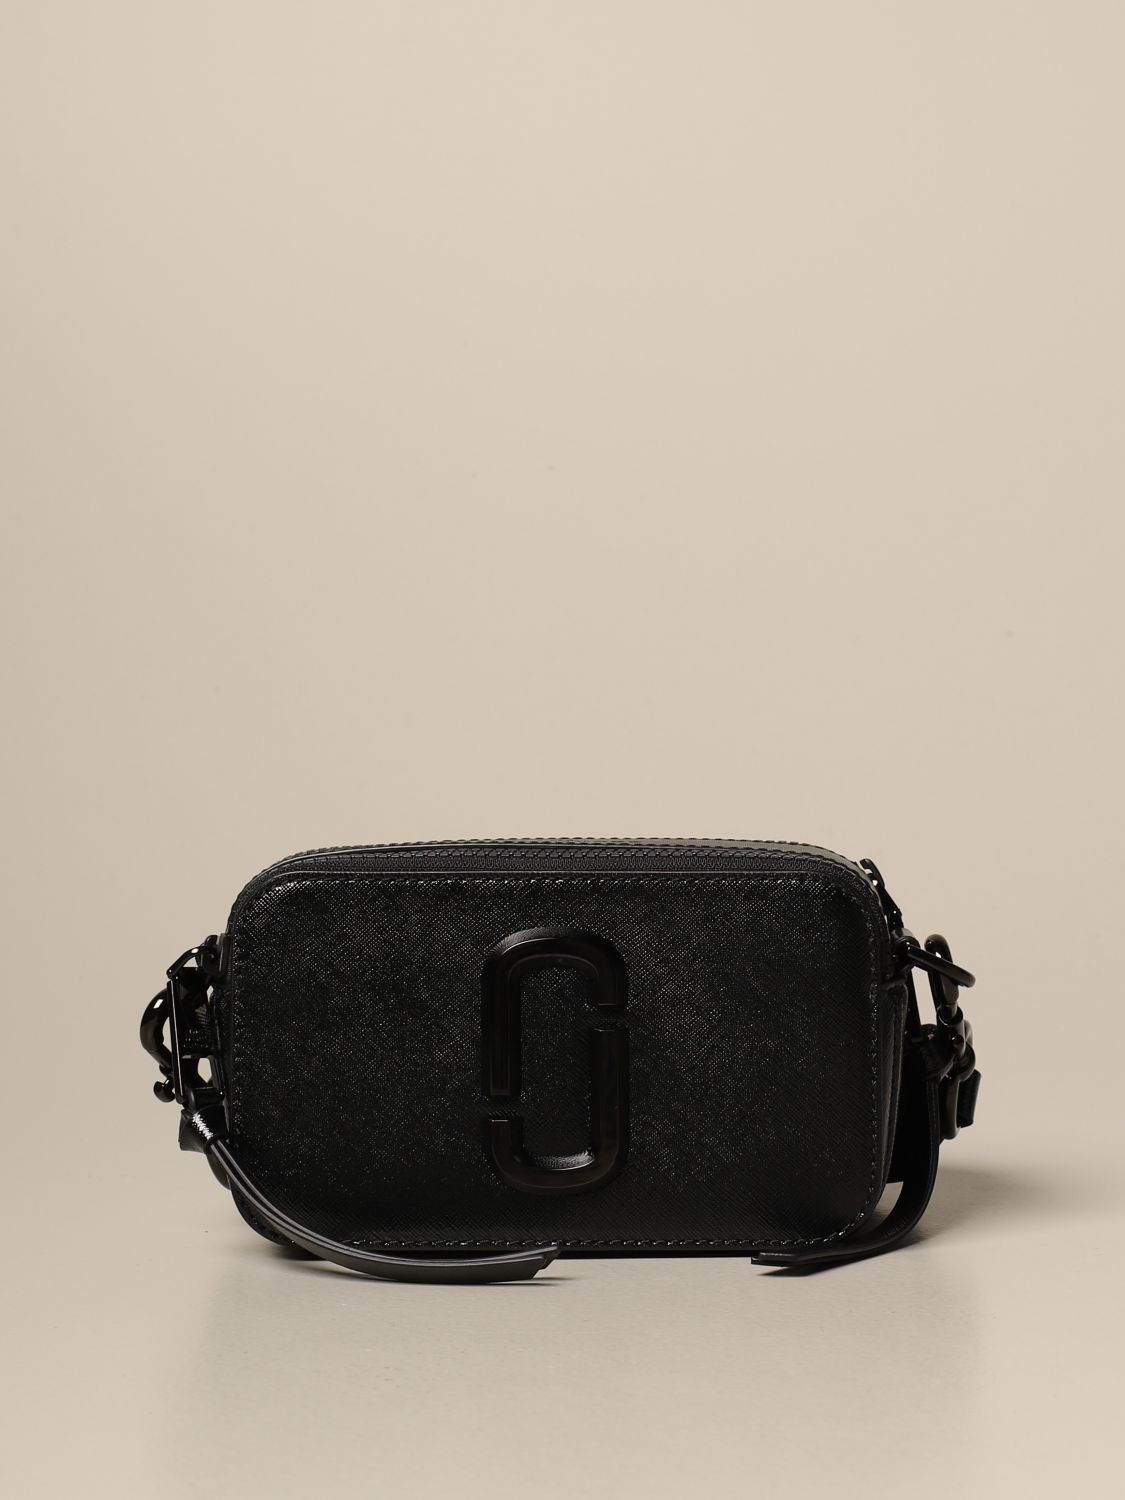 Marc Jacobs Snapshot DTM Black Small Camera bag crossbody [M0014867]